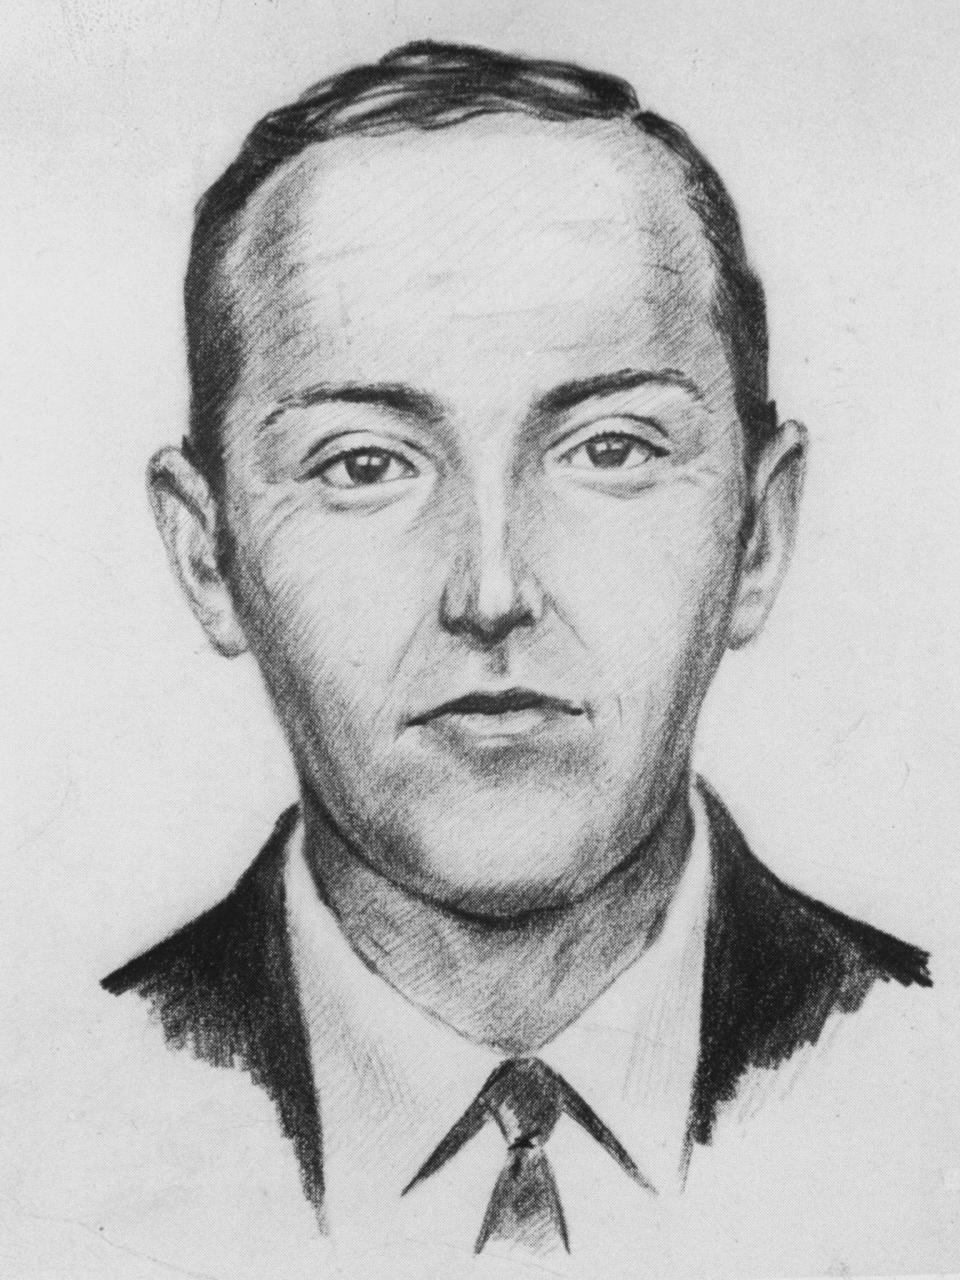 FBI sketch of hijacker D.B. Cooper